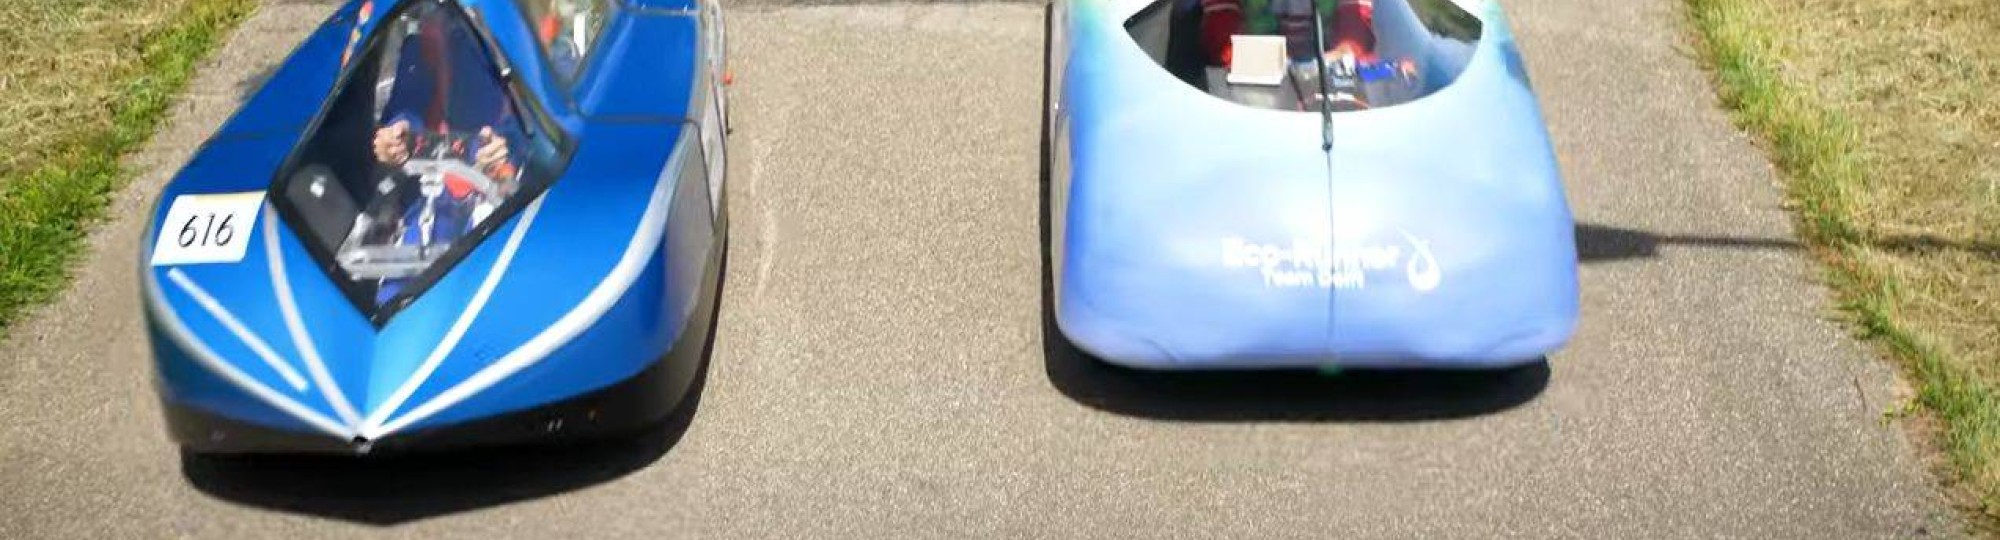 Automotive Hydromotive HM10 waterstofauto in race met Ecorunner TU Delft 2020